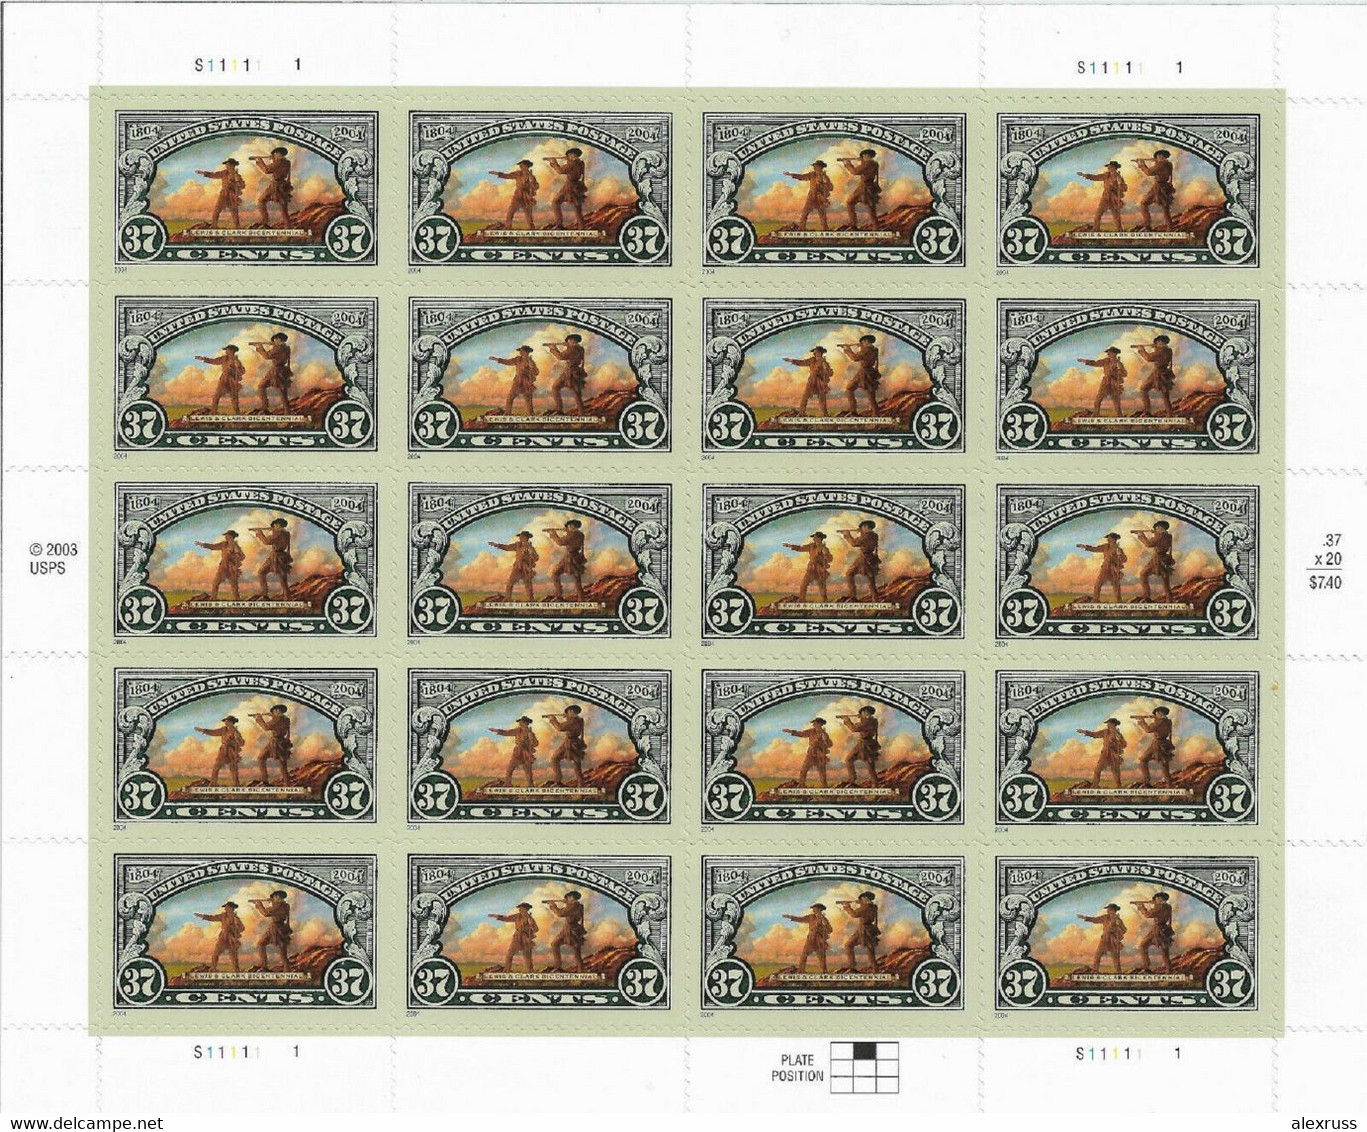 US 2004, Lewis & Clark Famous Explorers, 37 Cent, Full Sheet, Scott # 3854,VF MNH** - Sheets